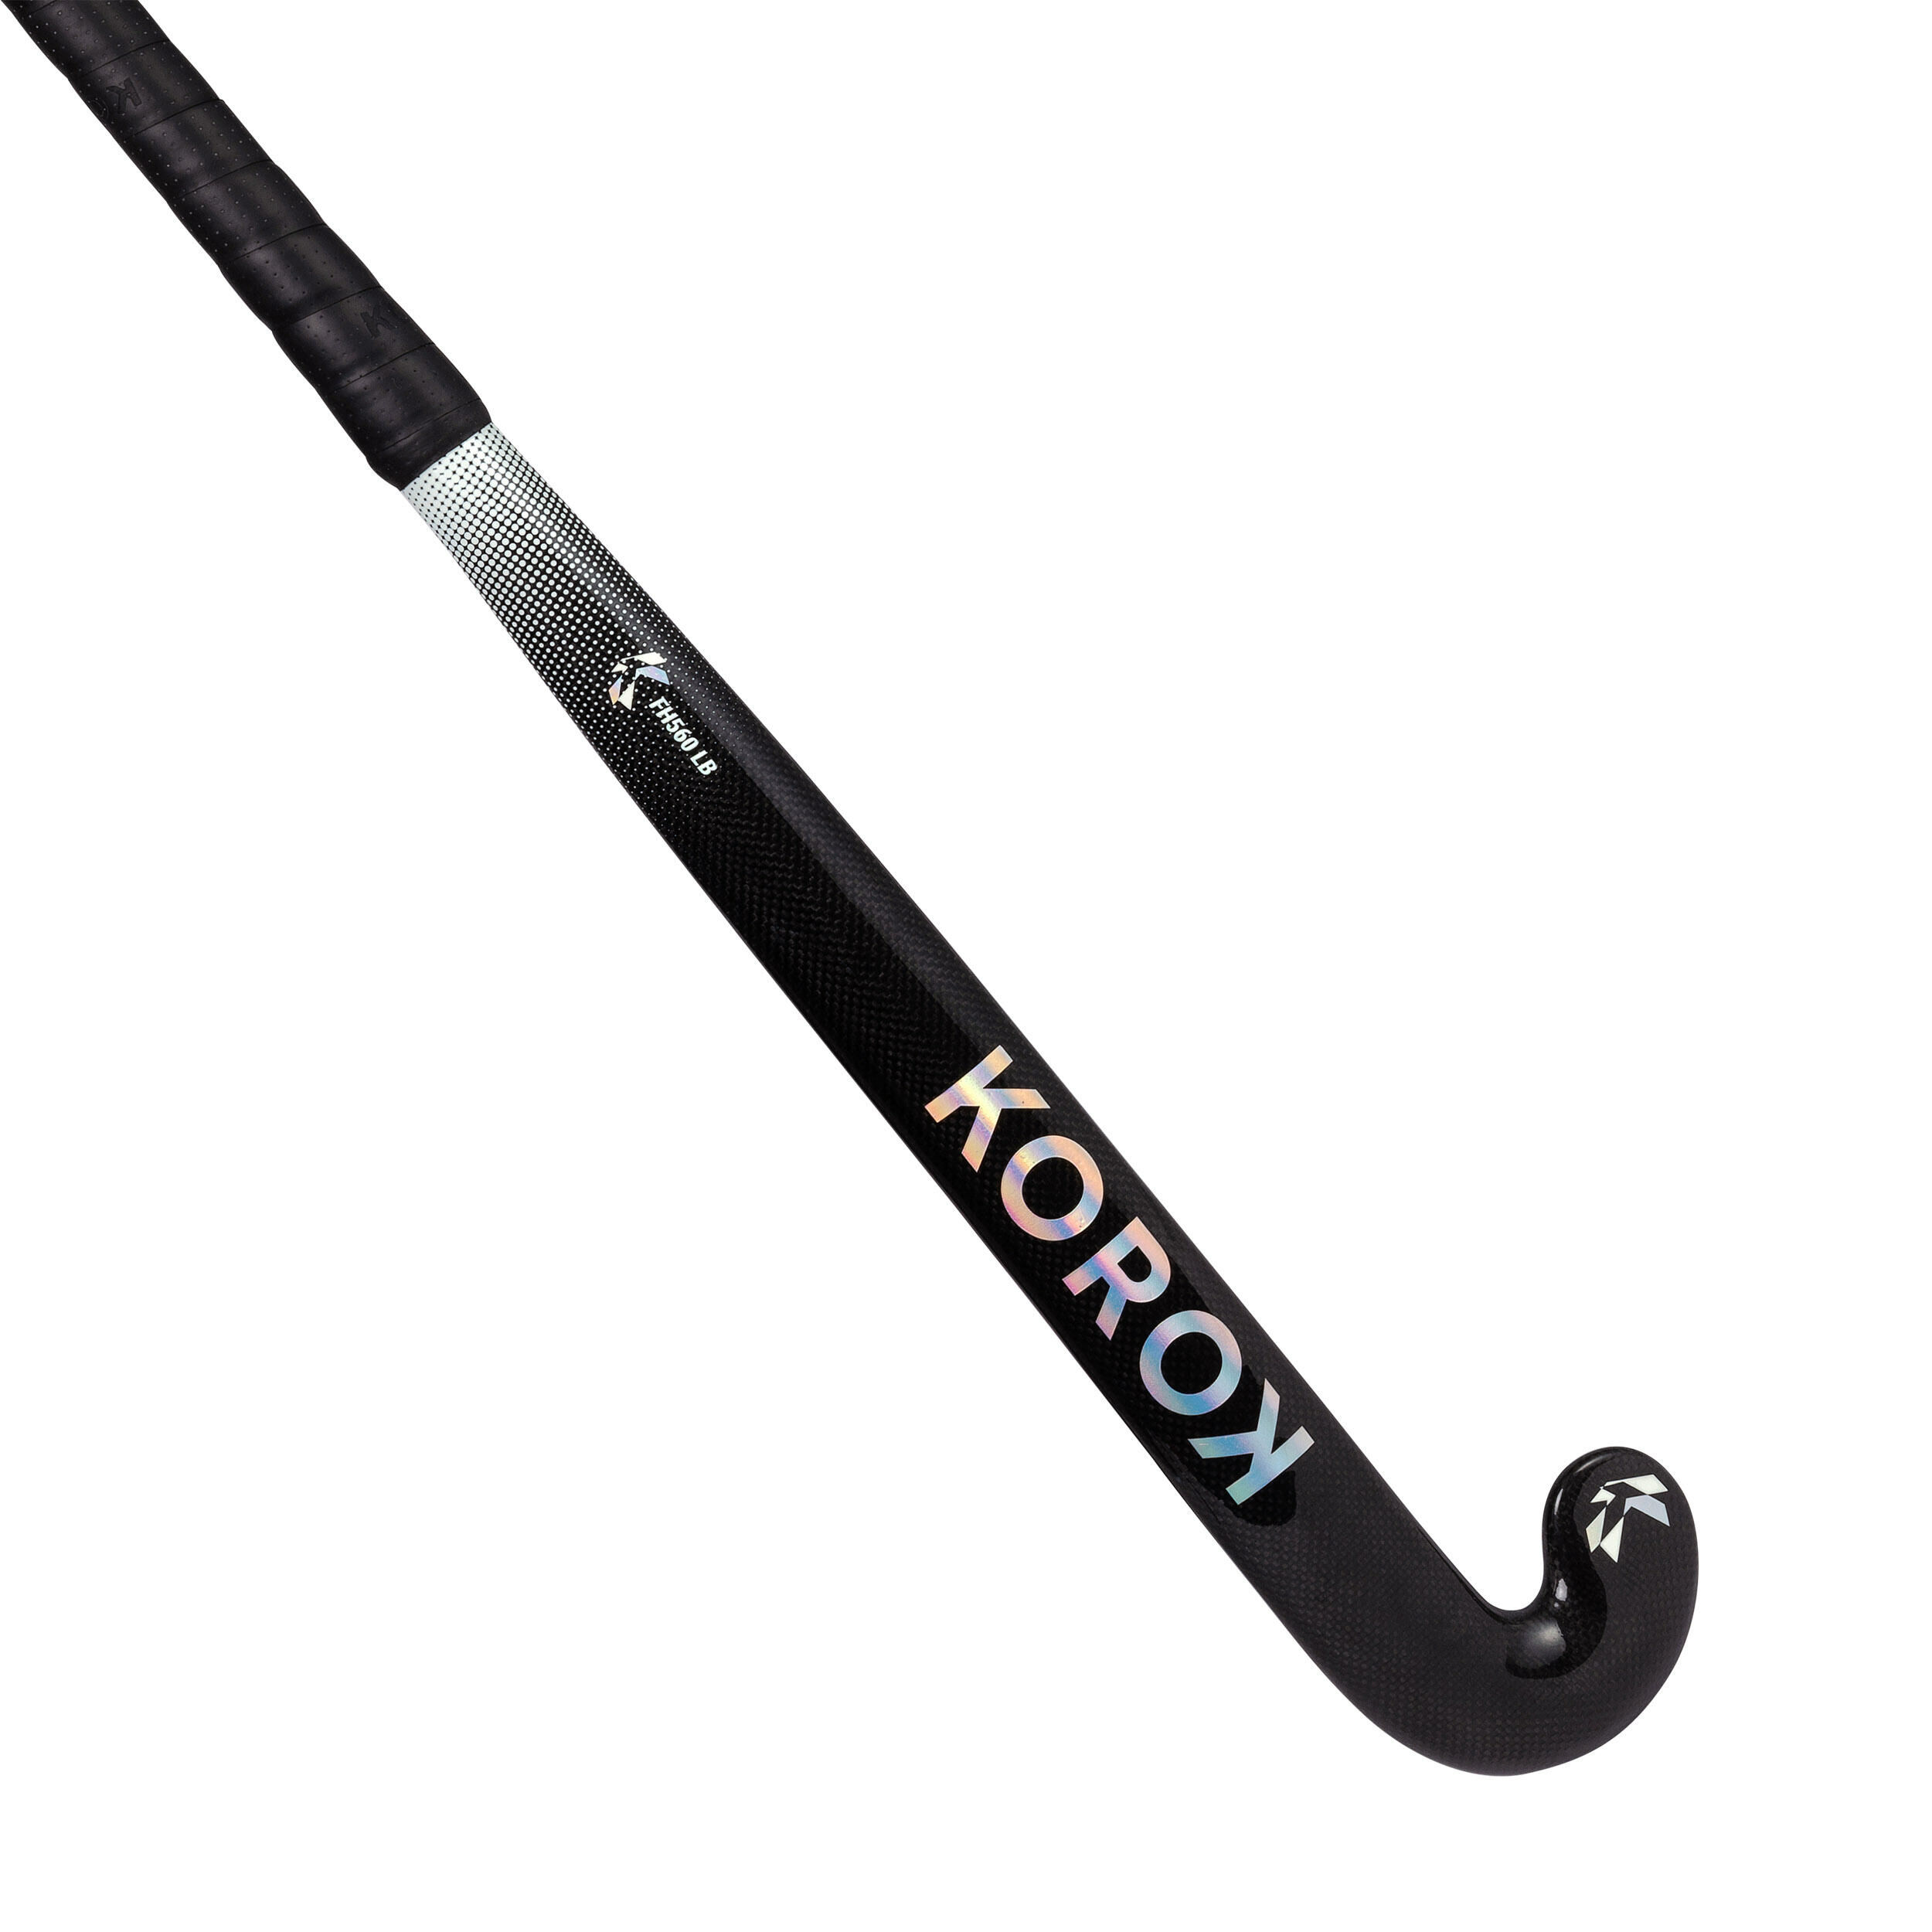 KOROK Adult Intermediate 60% Carbon Low Bow Field Hockey Stick FH560 - Black/Grey